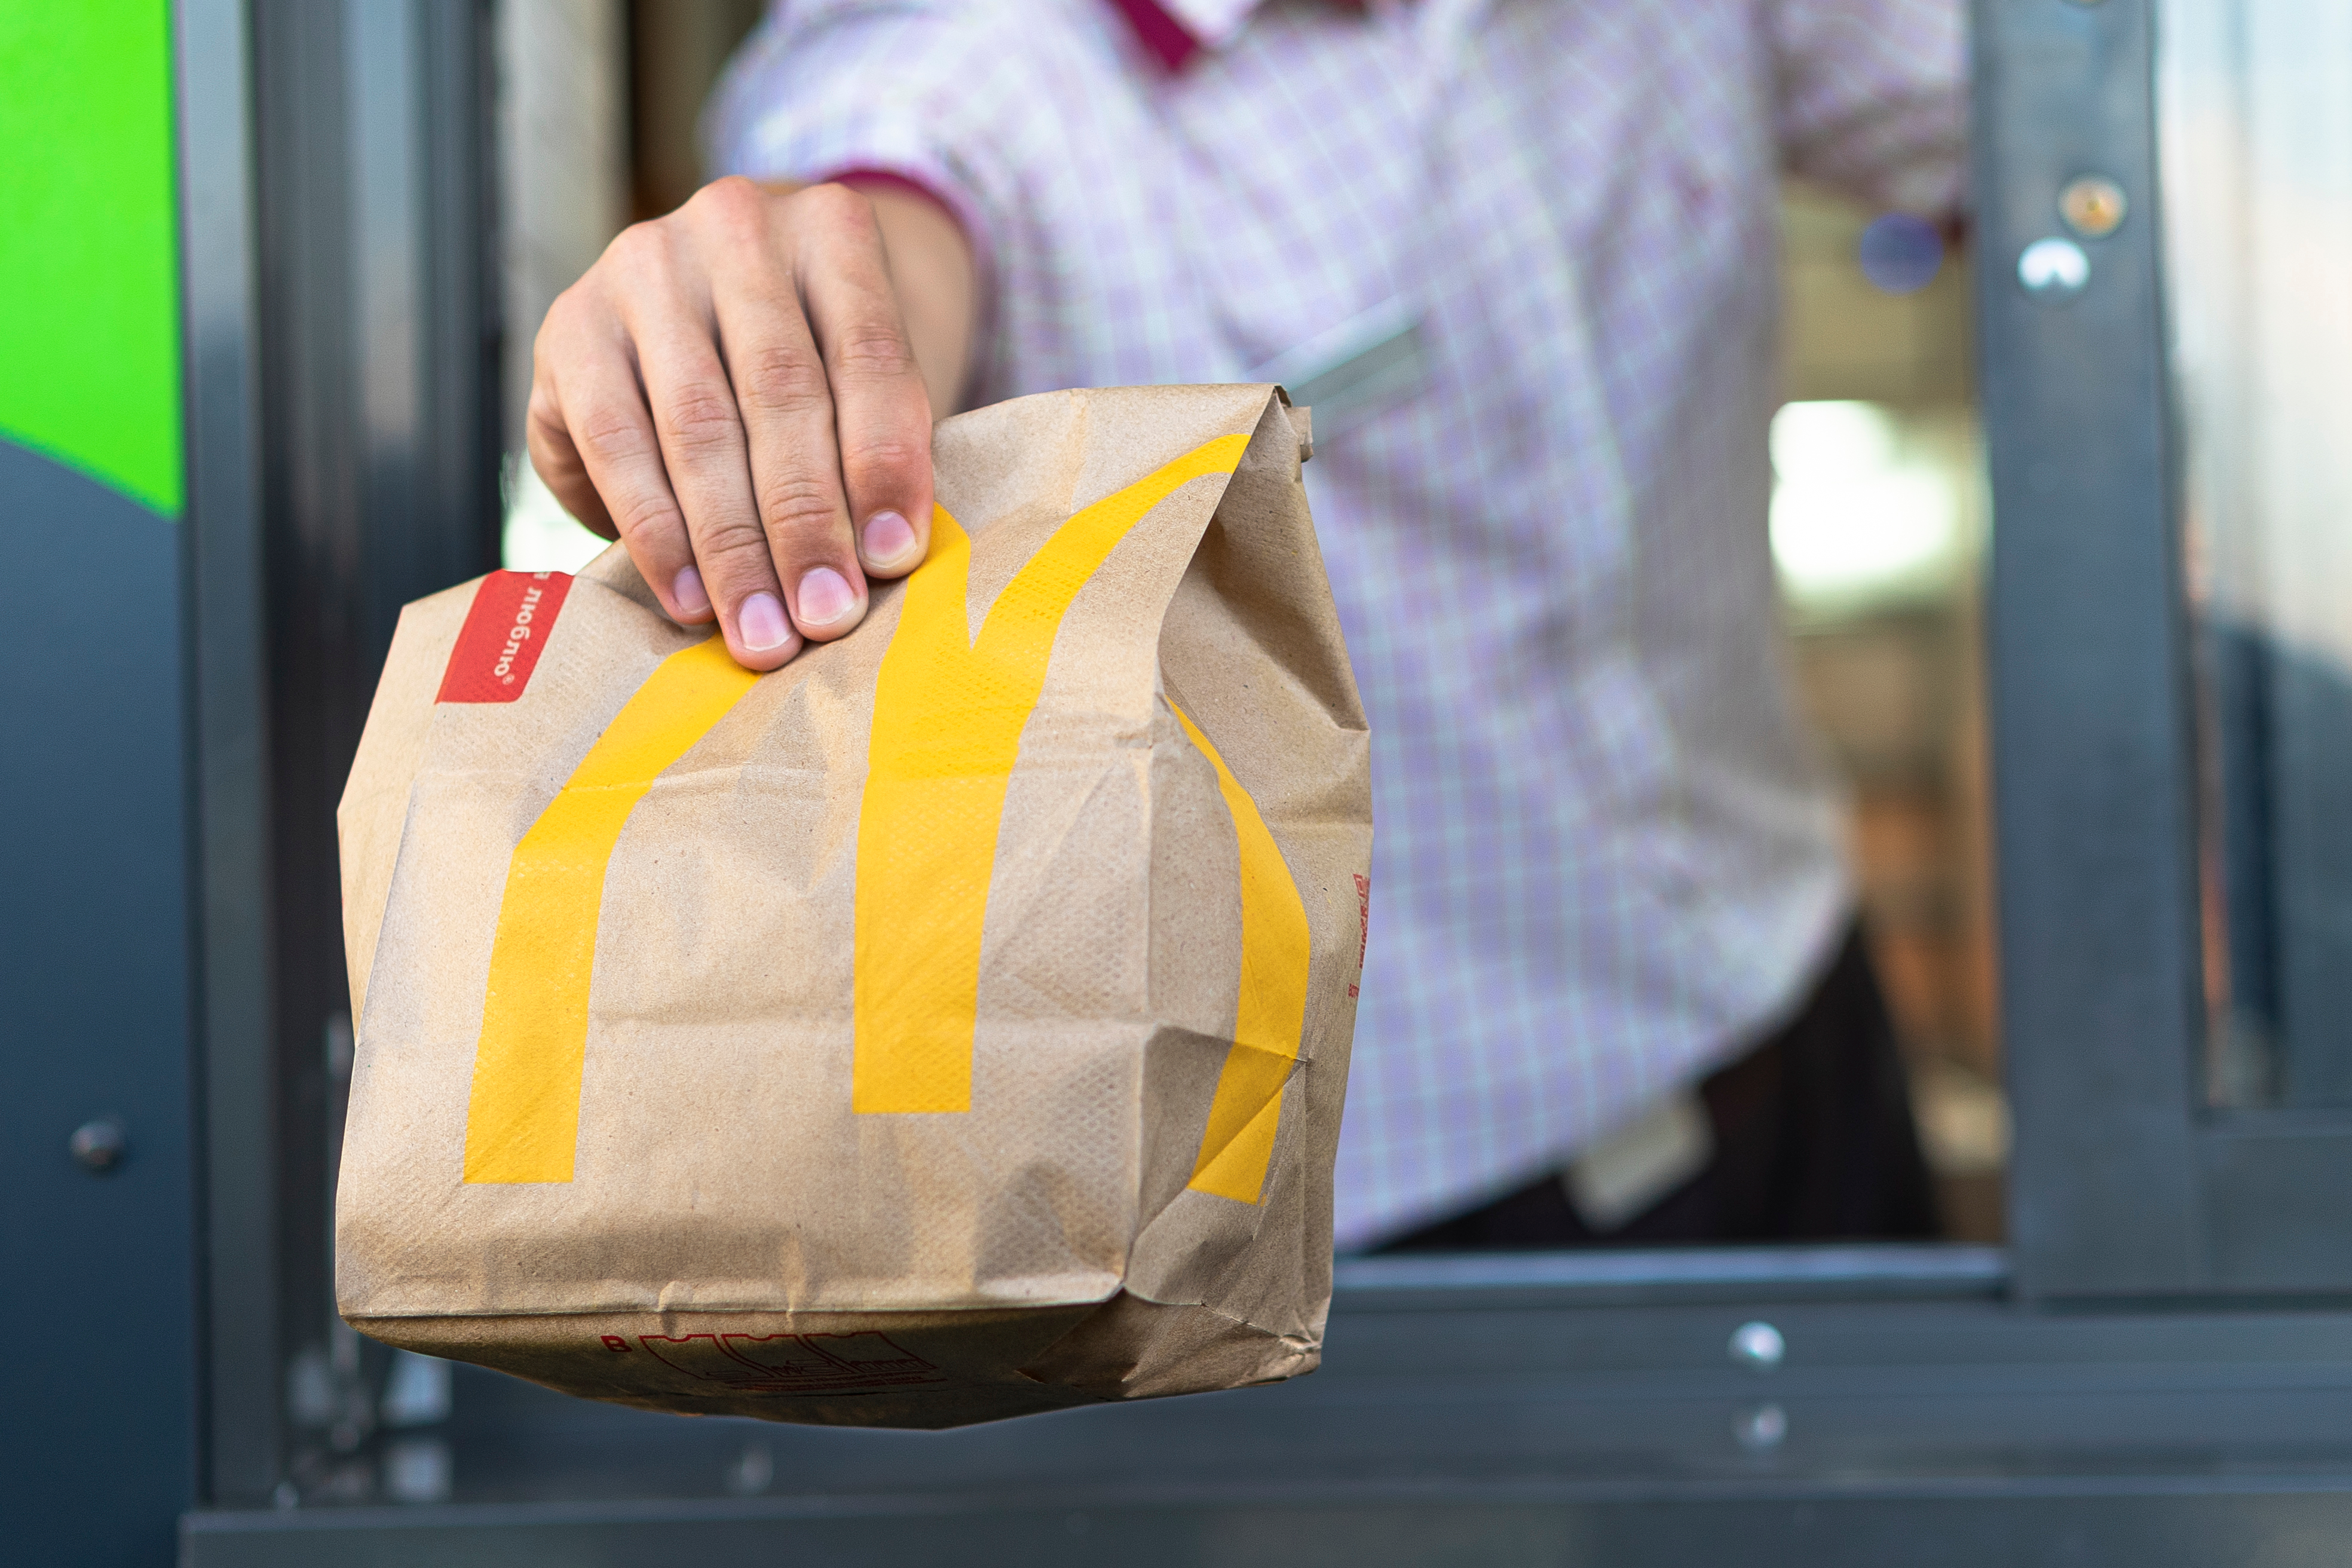 Vegan Fast Food, Food Service Market Research, and McDonald’s McPlant Burger